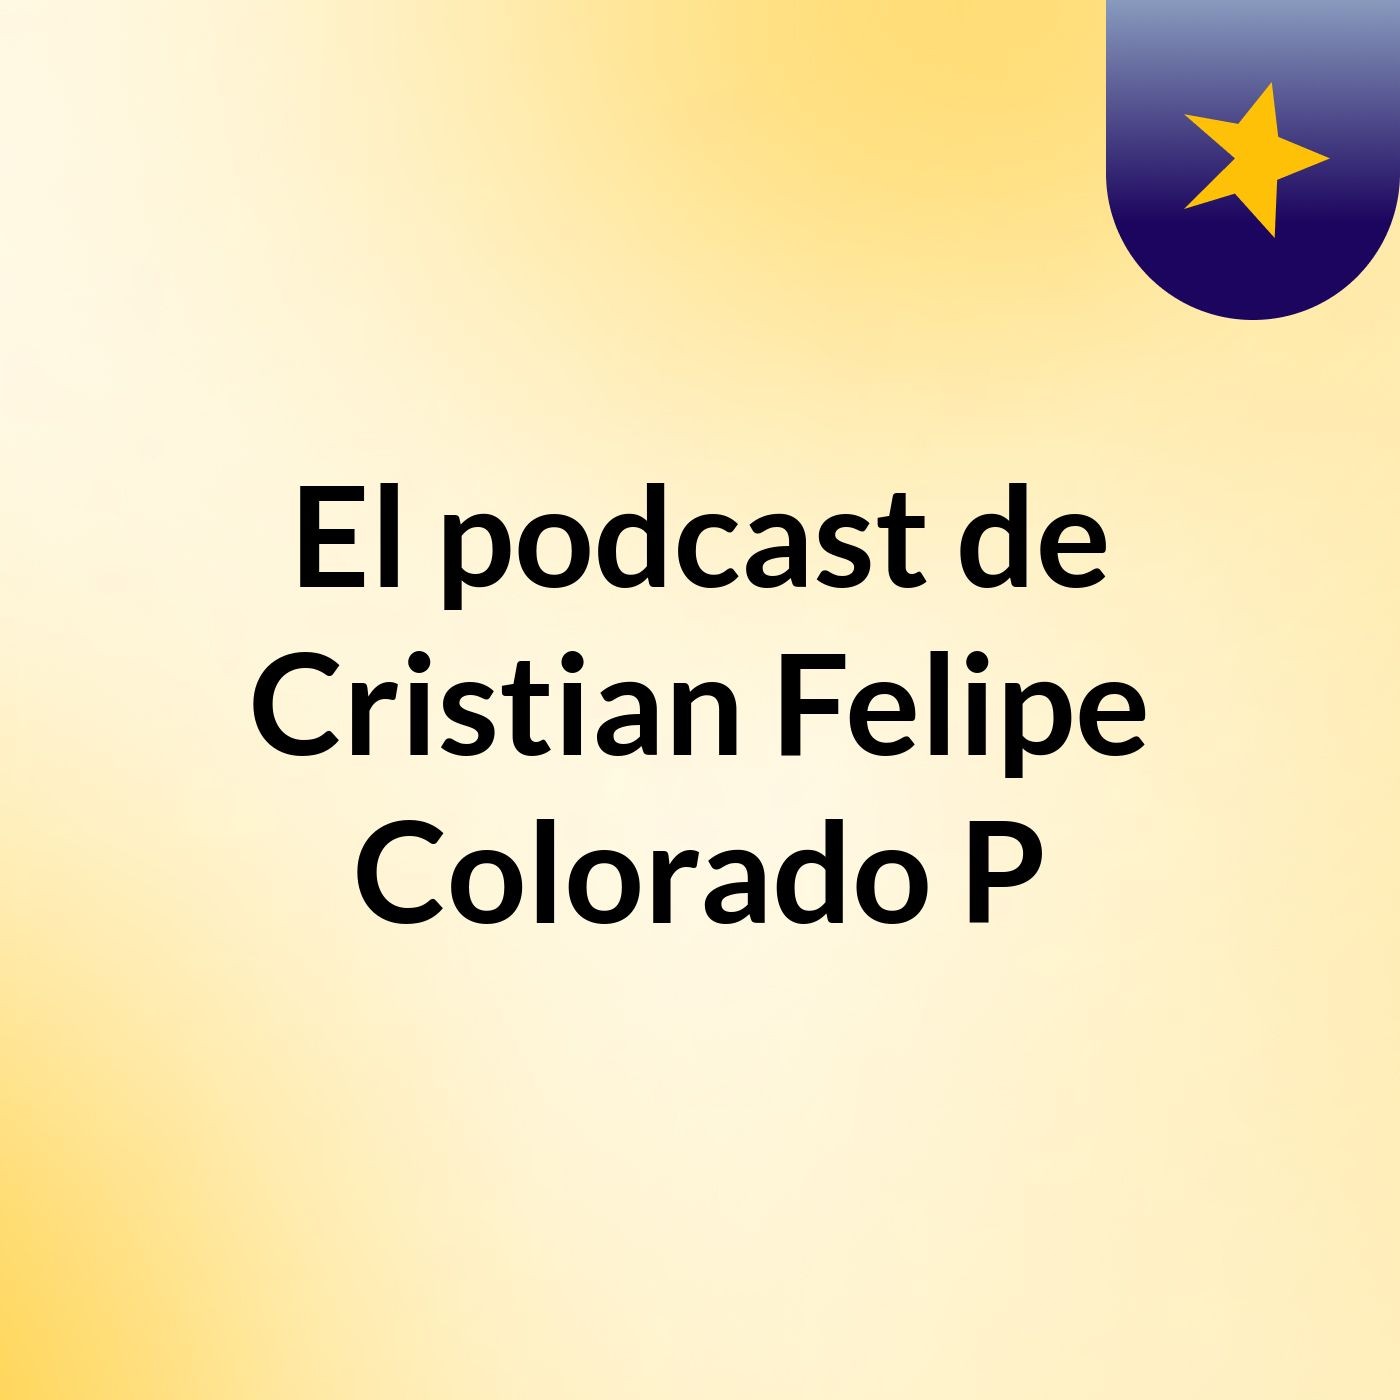 El podcast de Cristian Felipe Colorado P